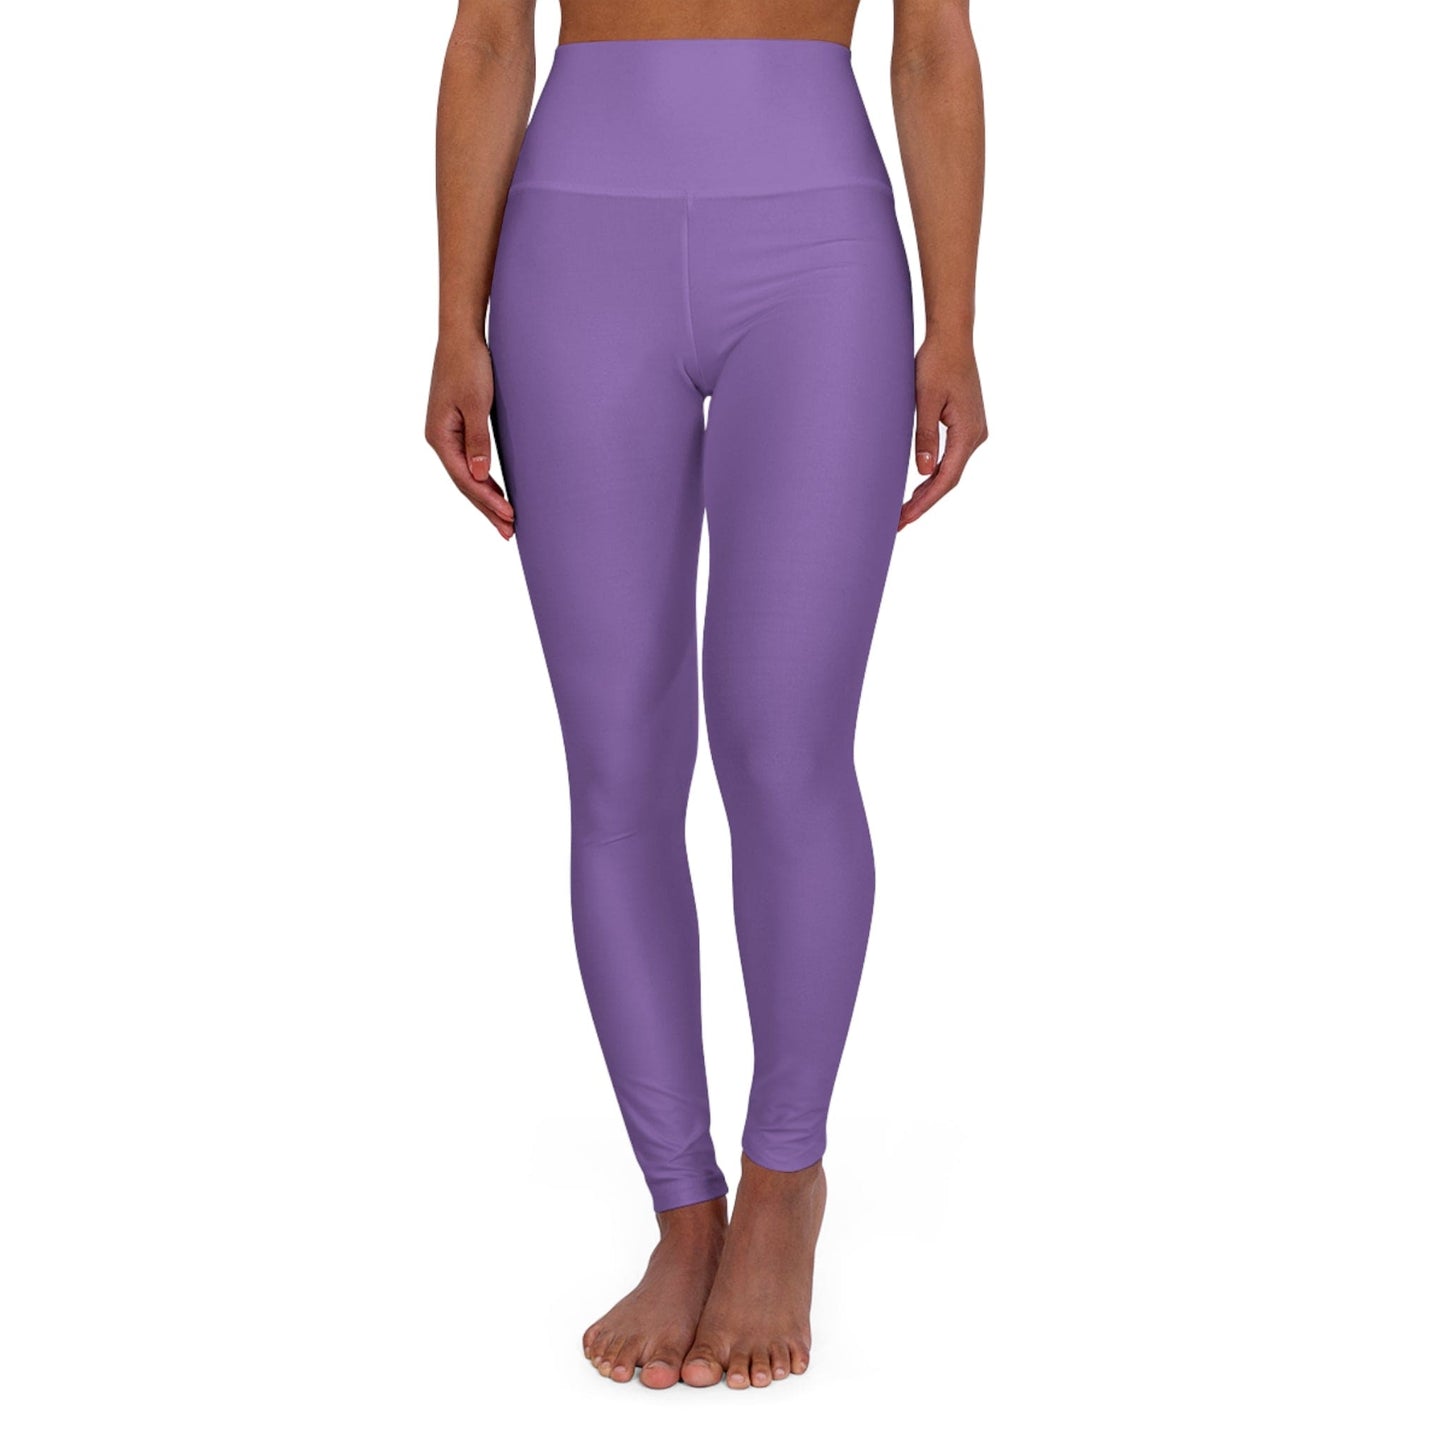 FartPants High Waisted Yoga Leggings - Purple Yoga Workout Pants - Com